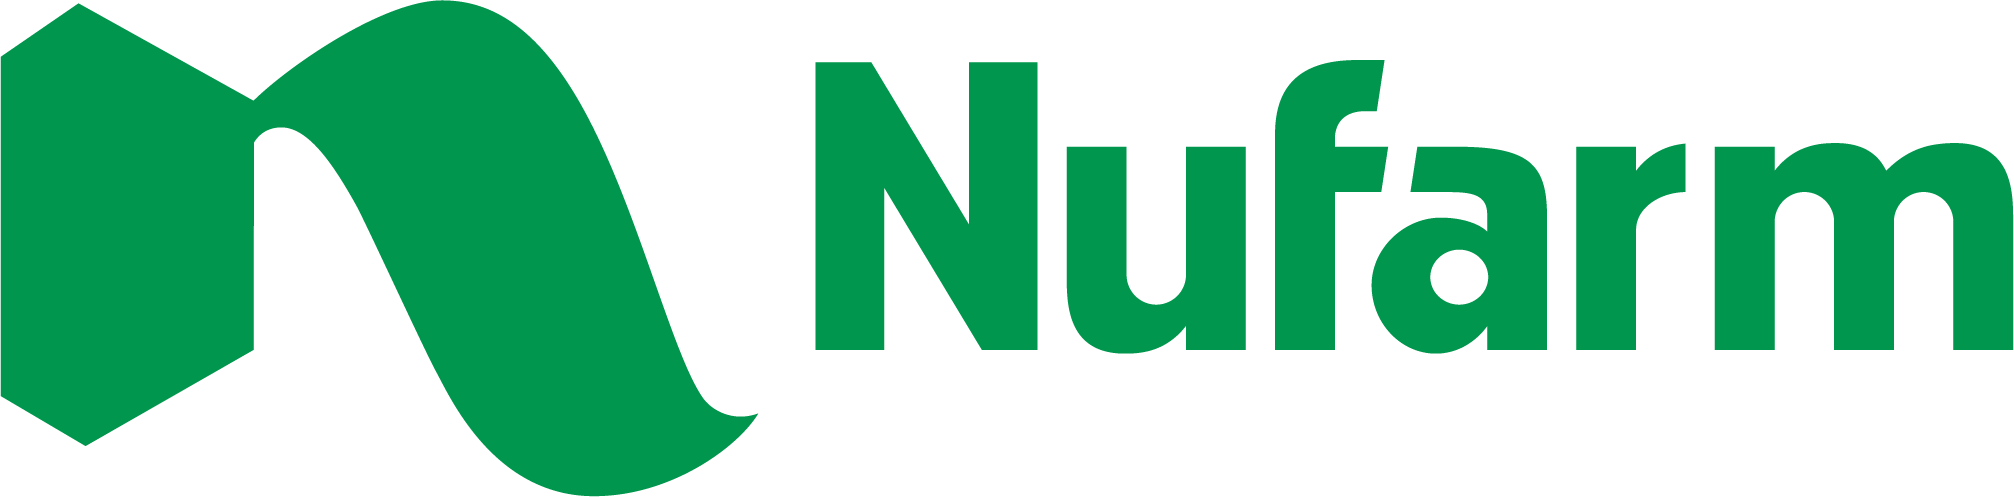 Logo of Nufarm